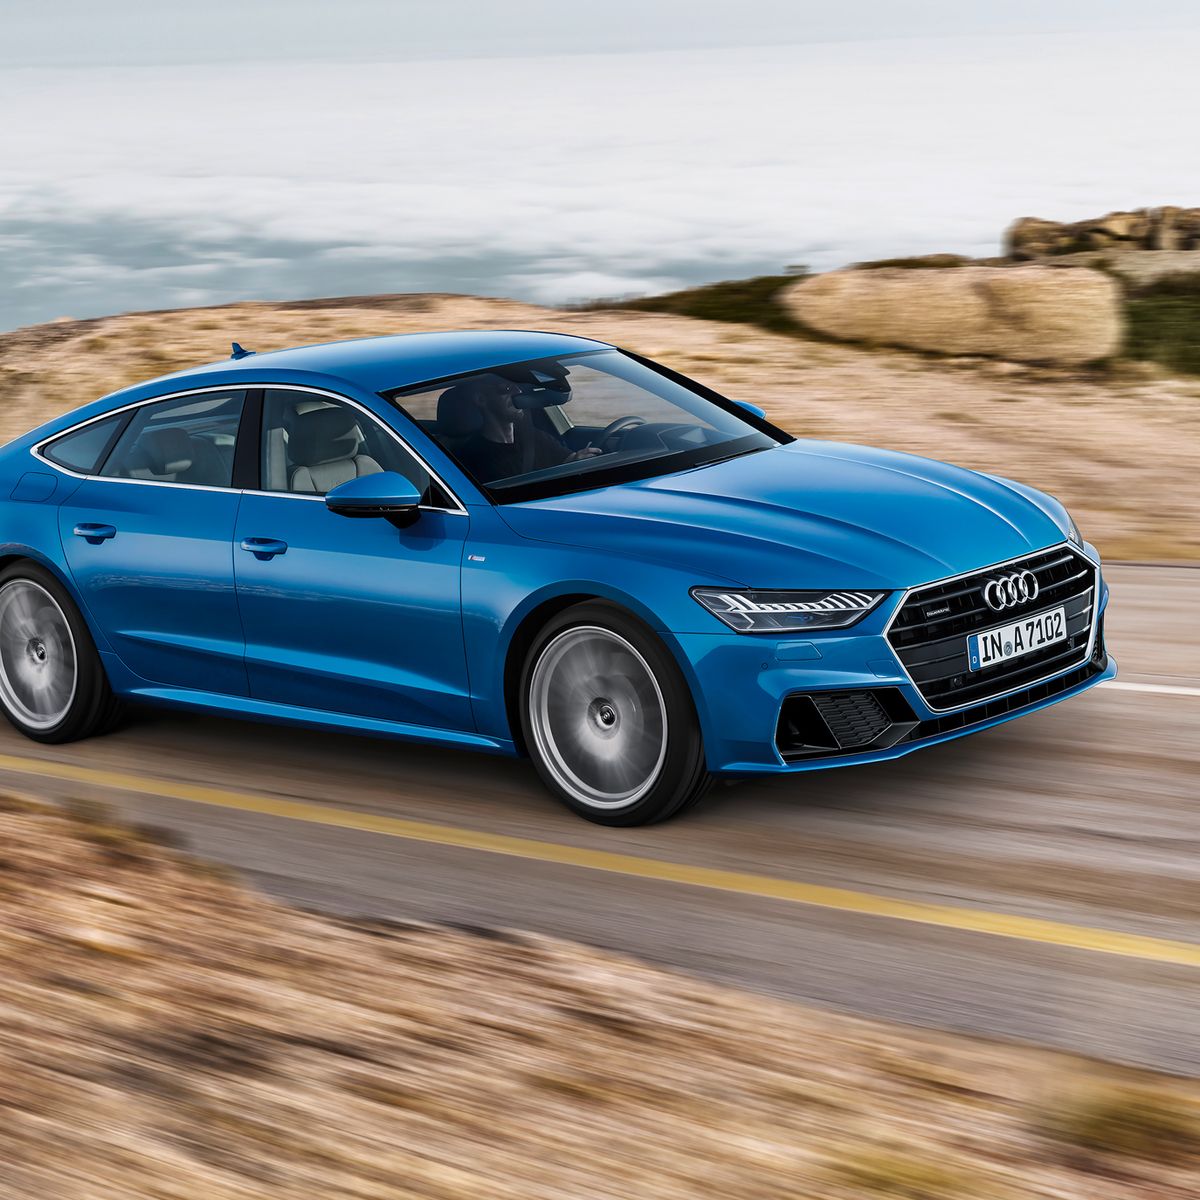 2019 Audi A7 Makes Auto Show Debut - Kelley Blue Book